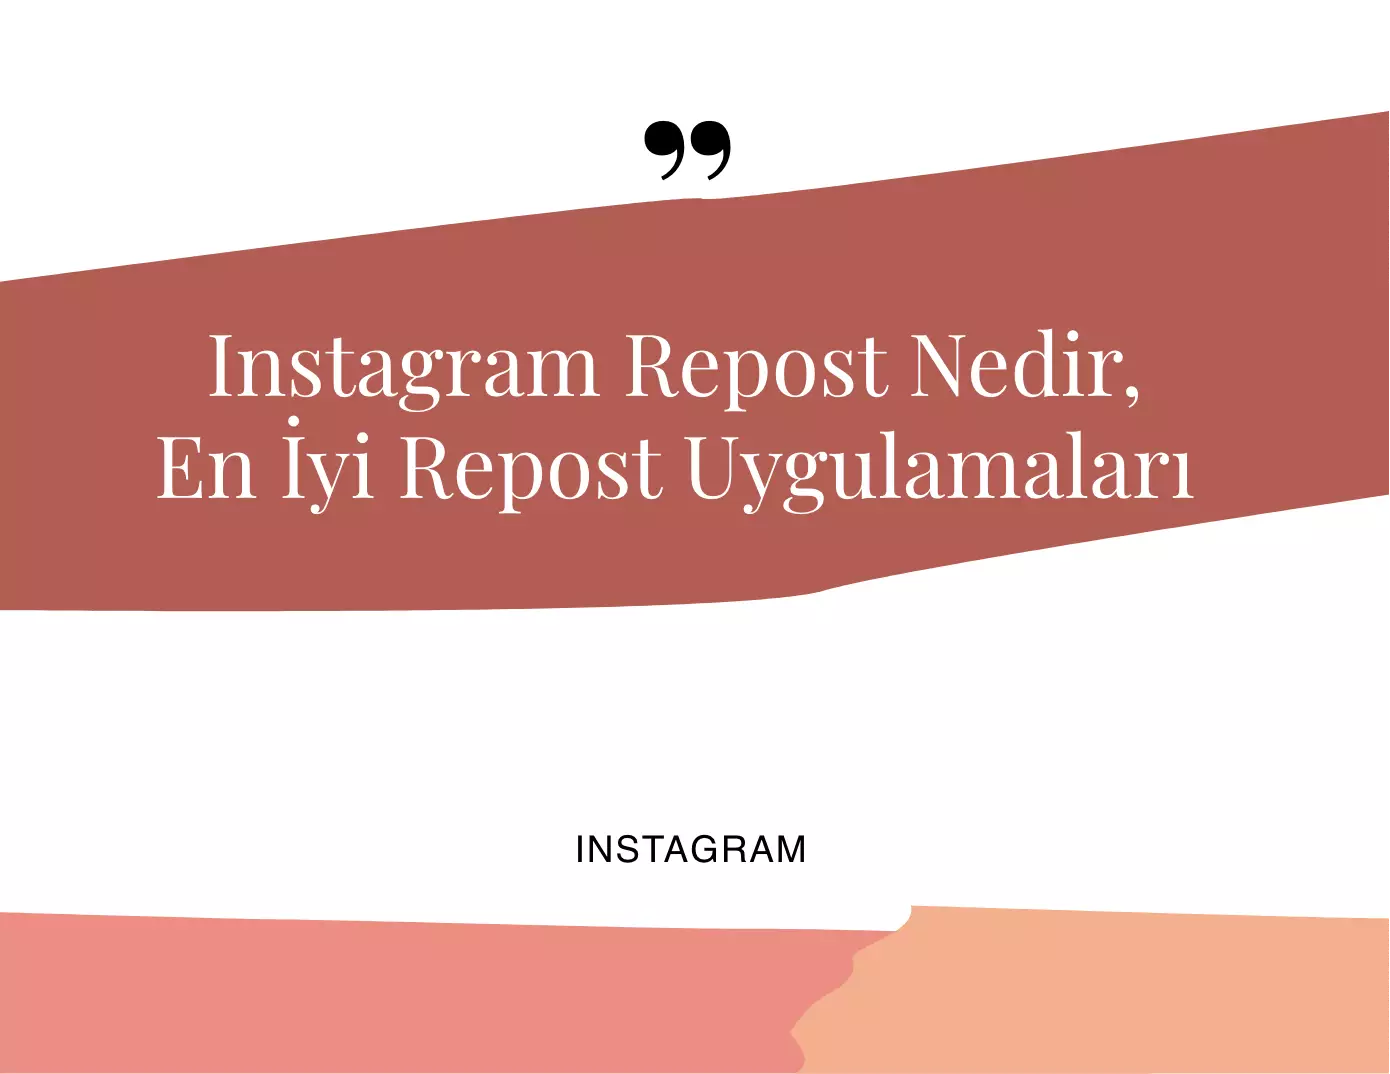 Instagram Repost Nedir?